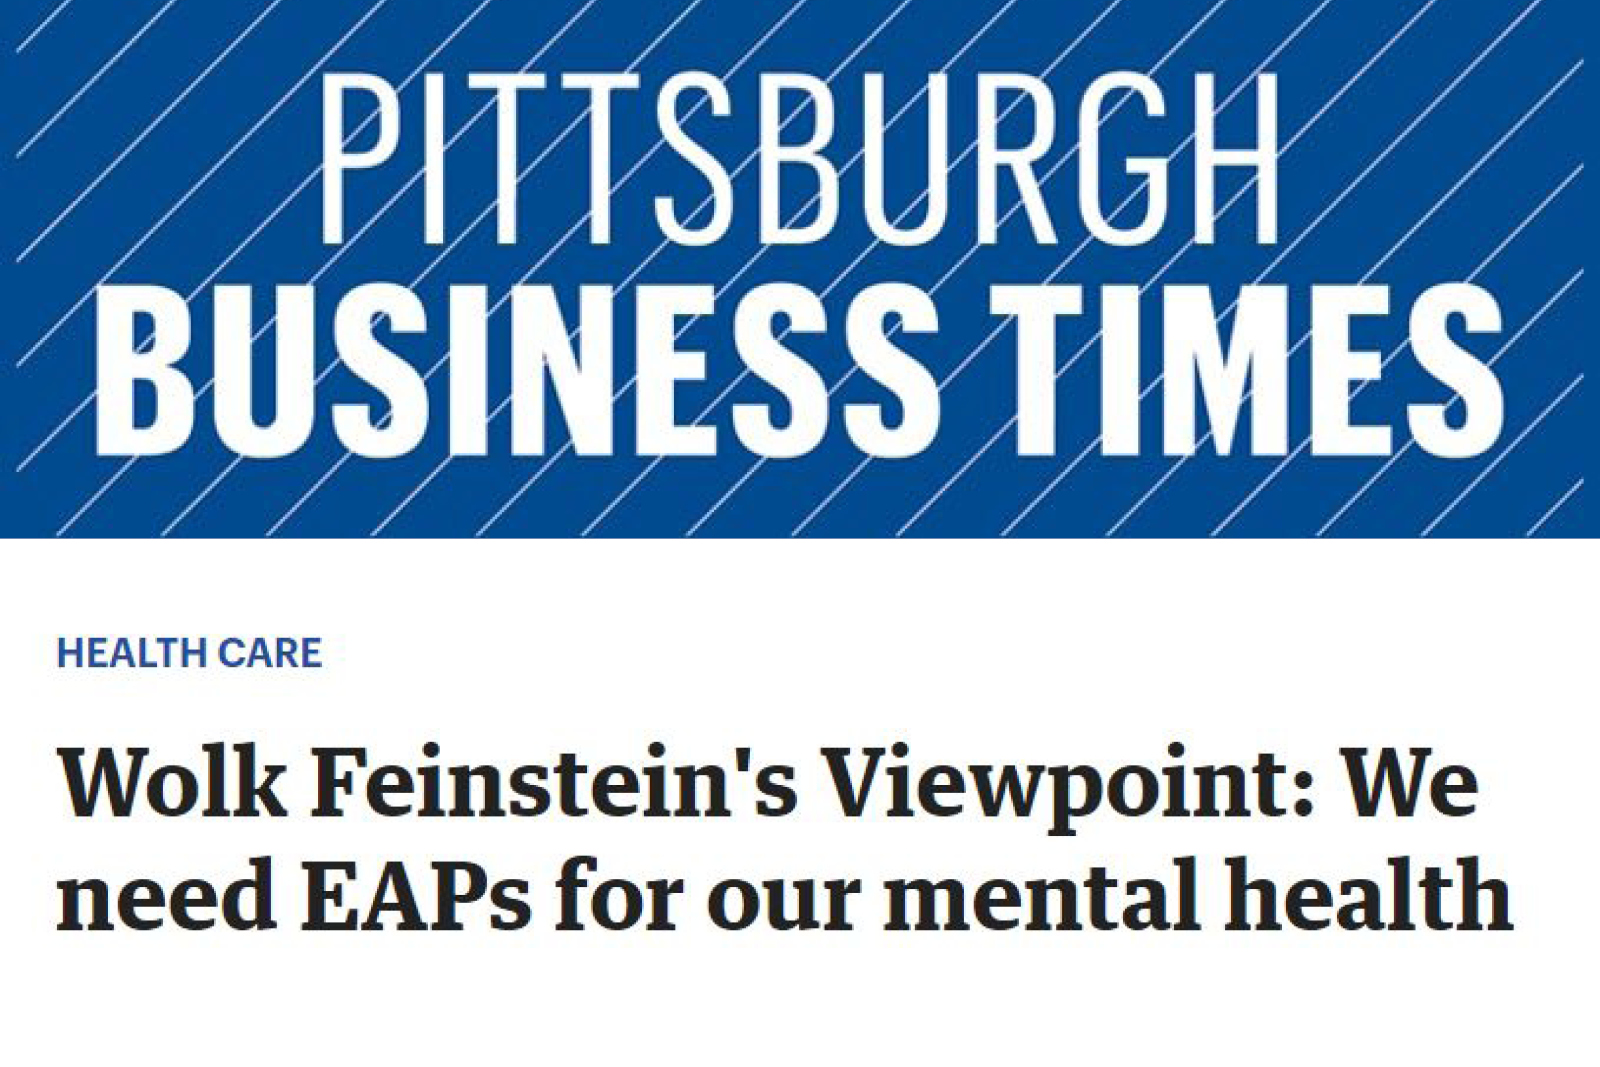 Pittsburgh Business Times headline